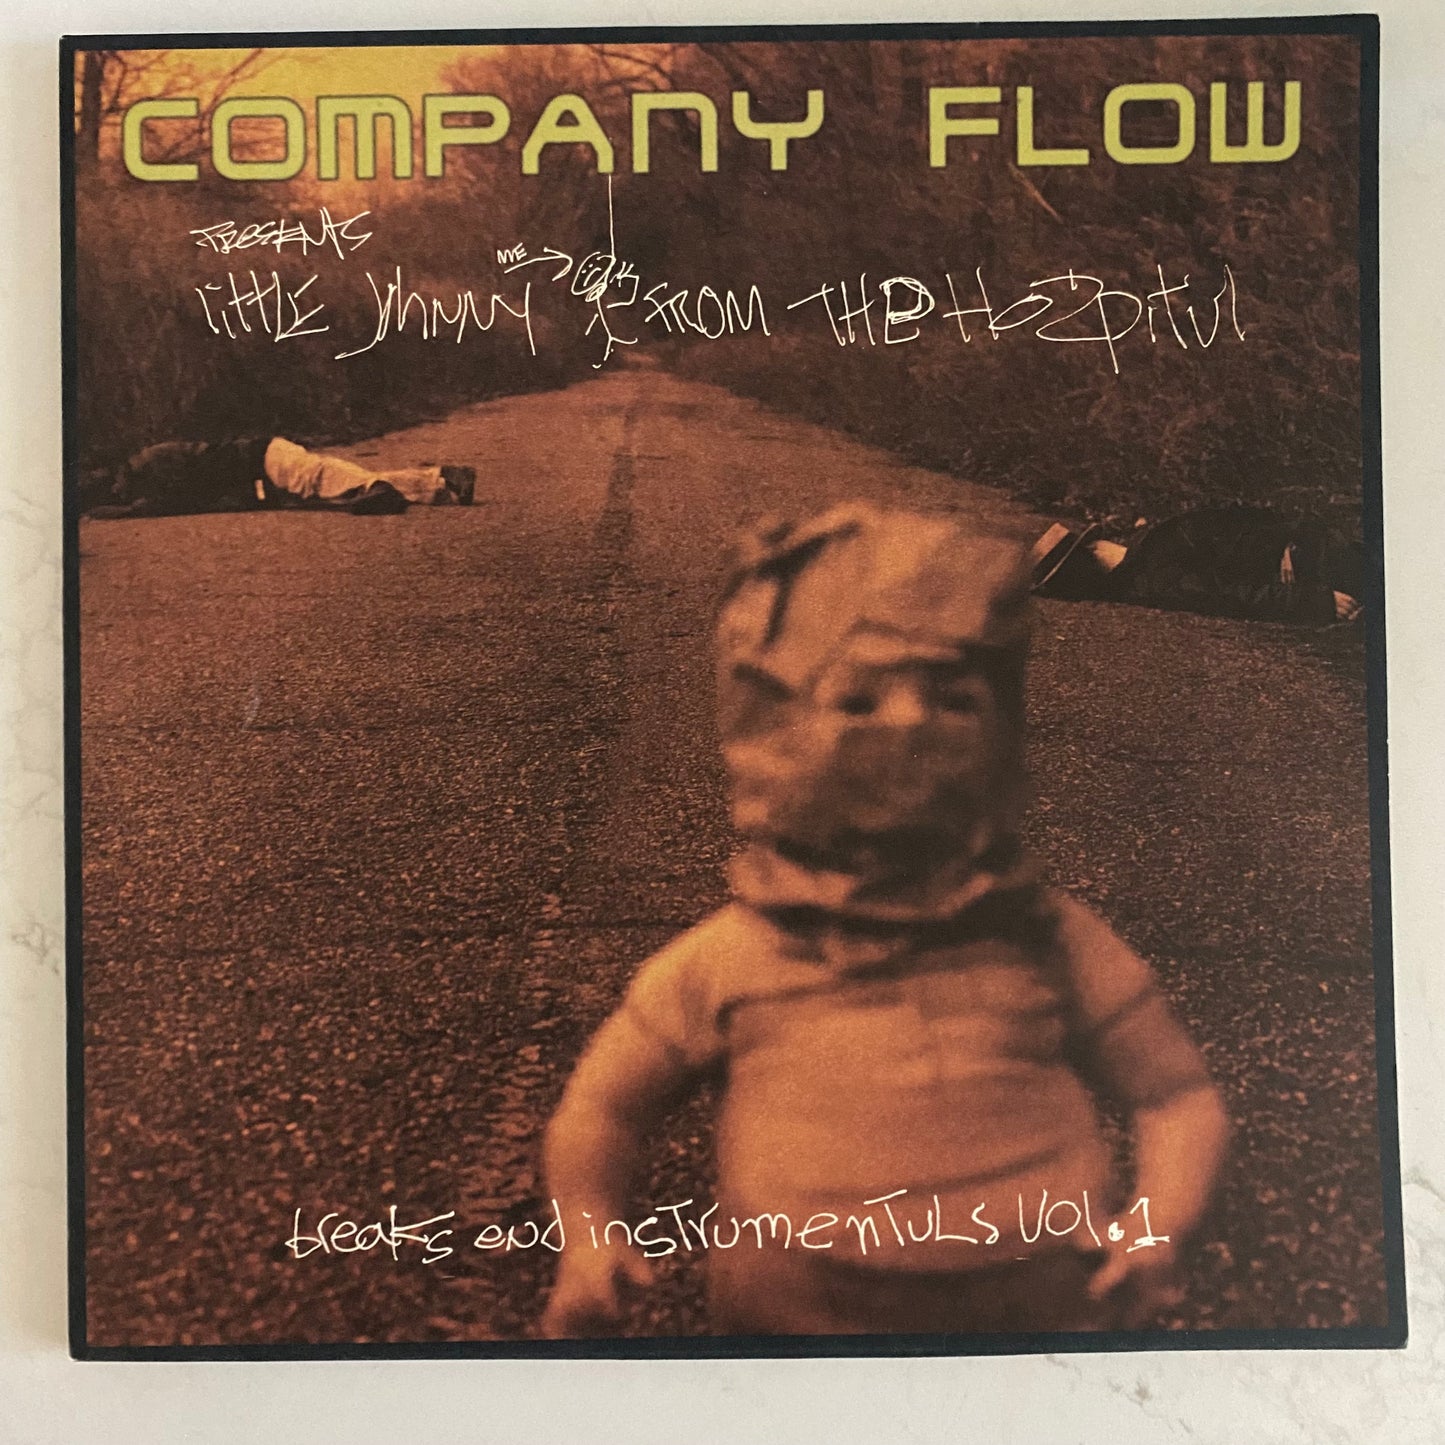 Company Flow - Little Johnny From The Hospitul (Breaks End Instrumentuls Vol.1) (2xLP, Album) HIP-HOP